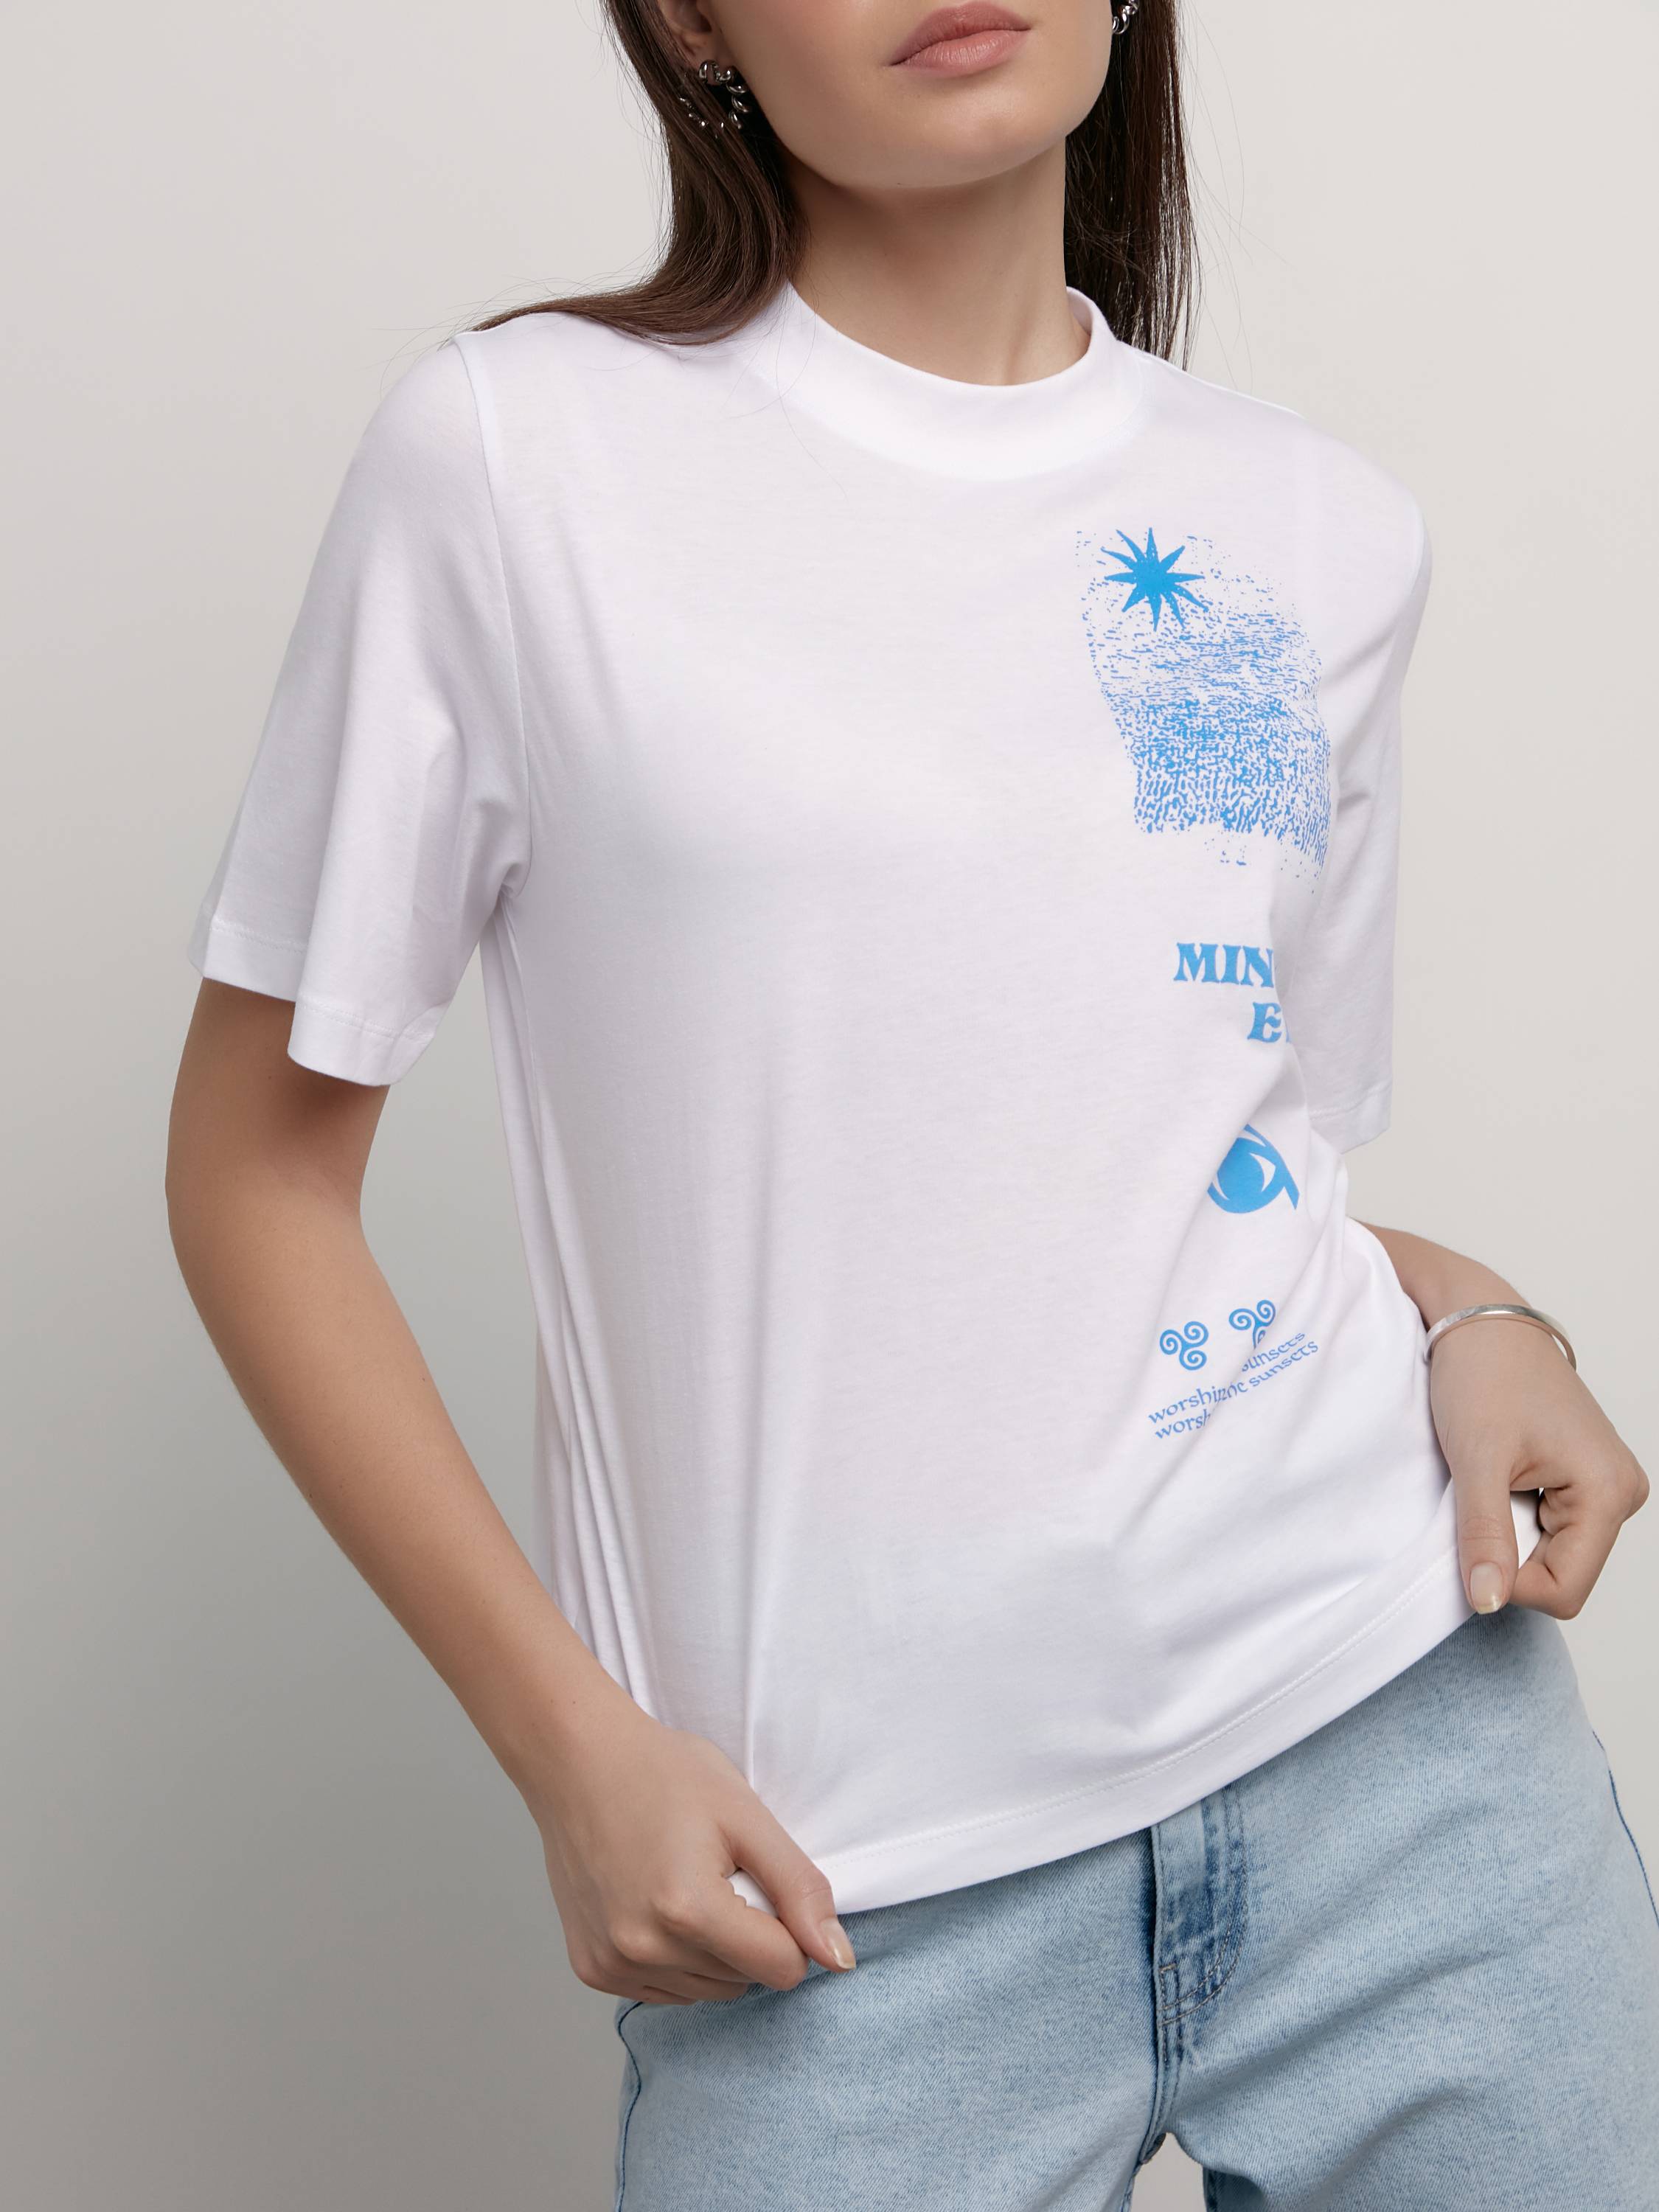 Свободная футболка из хлопка с рисунком «Mind's eye» LD 2097 Conte ⭐️, цвет white, размер 170-100/xl